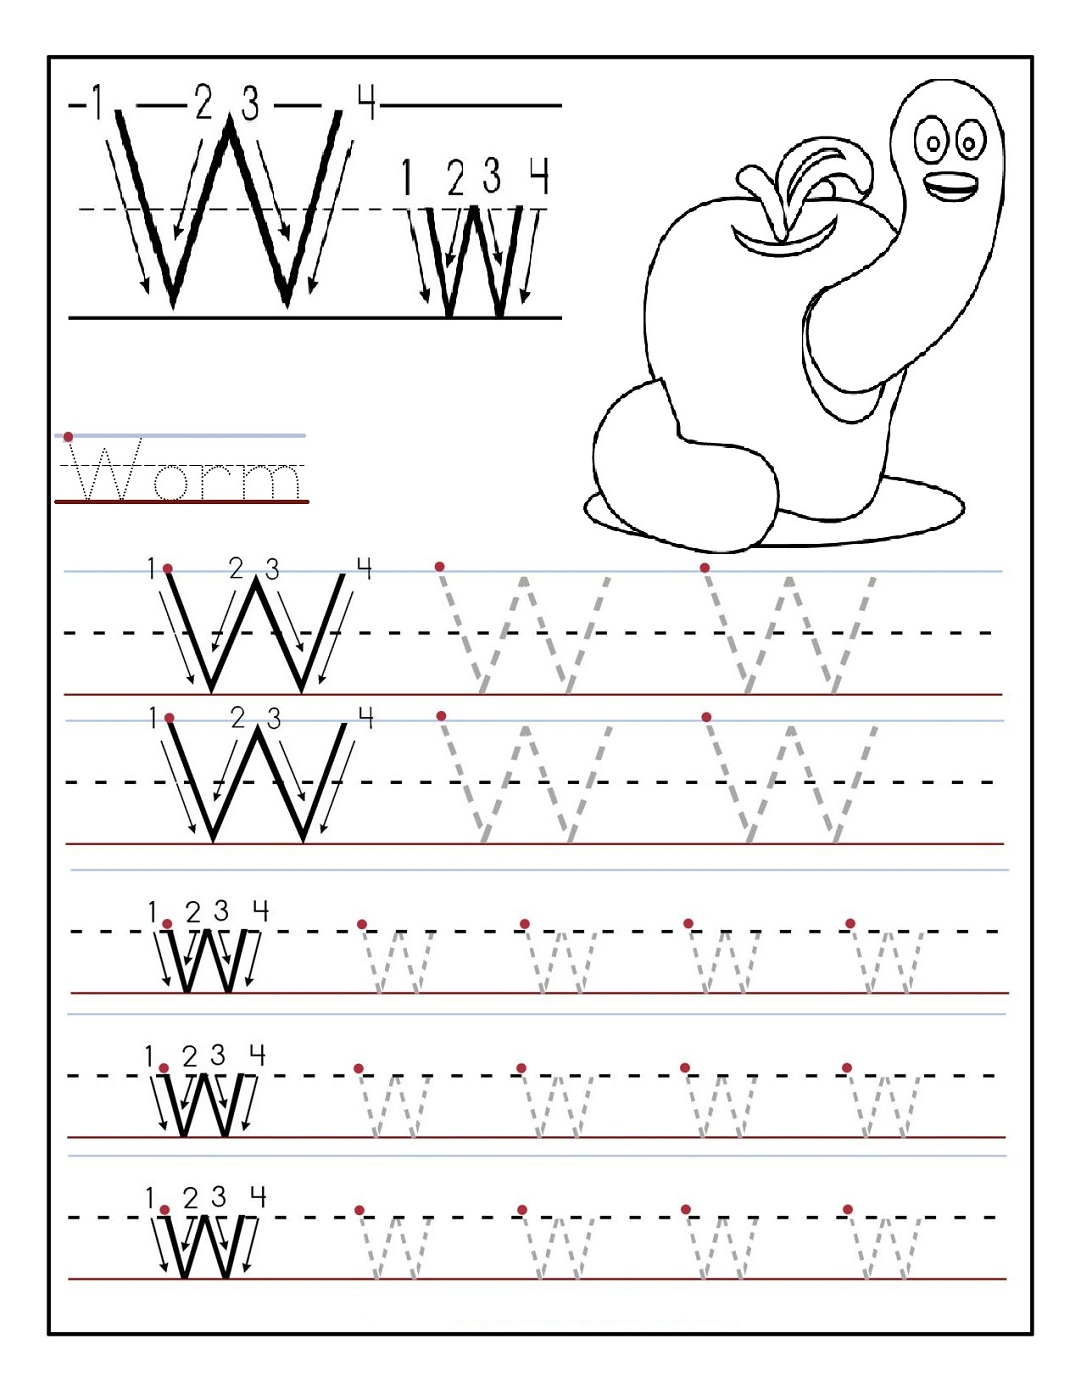 english-alphabet-worksheet-for-kindergarten-activity-shelter